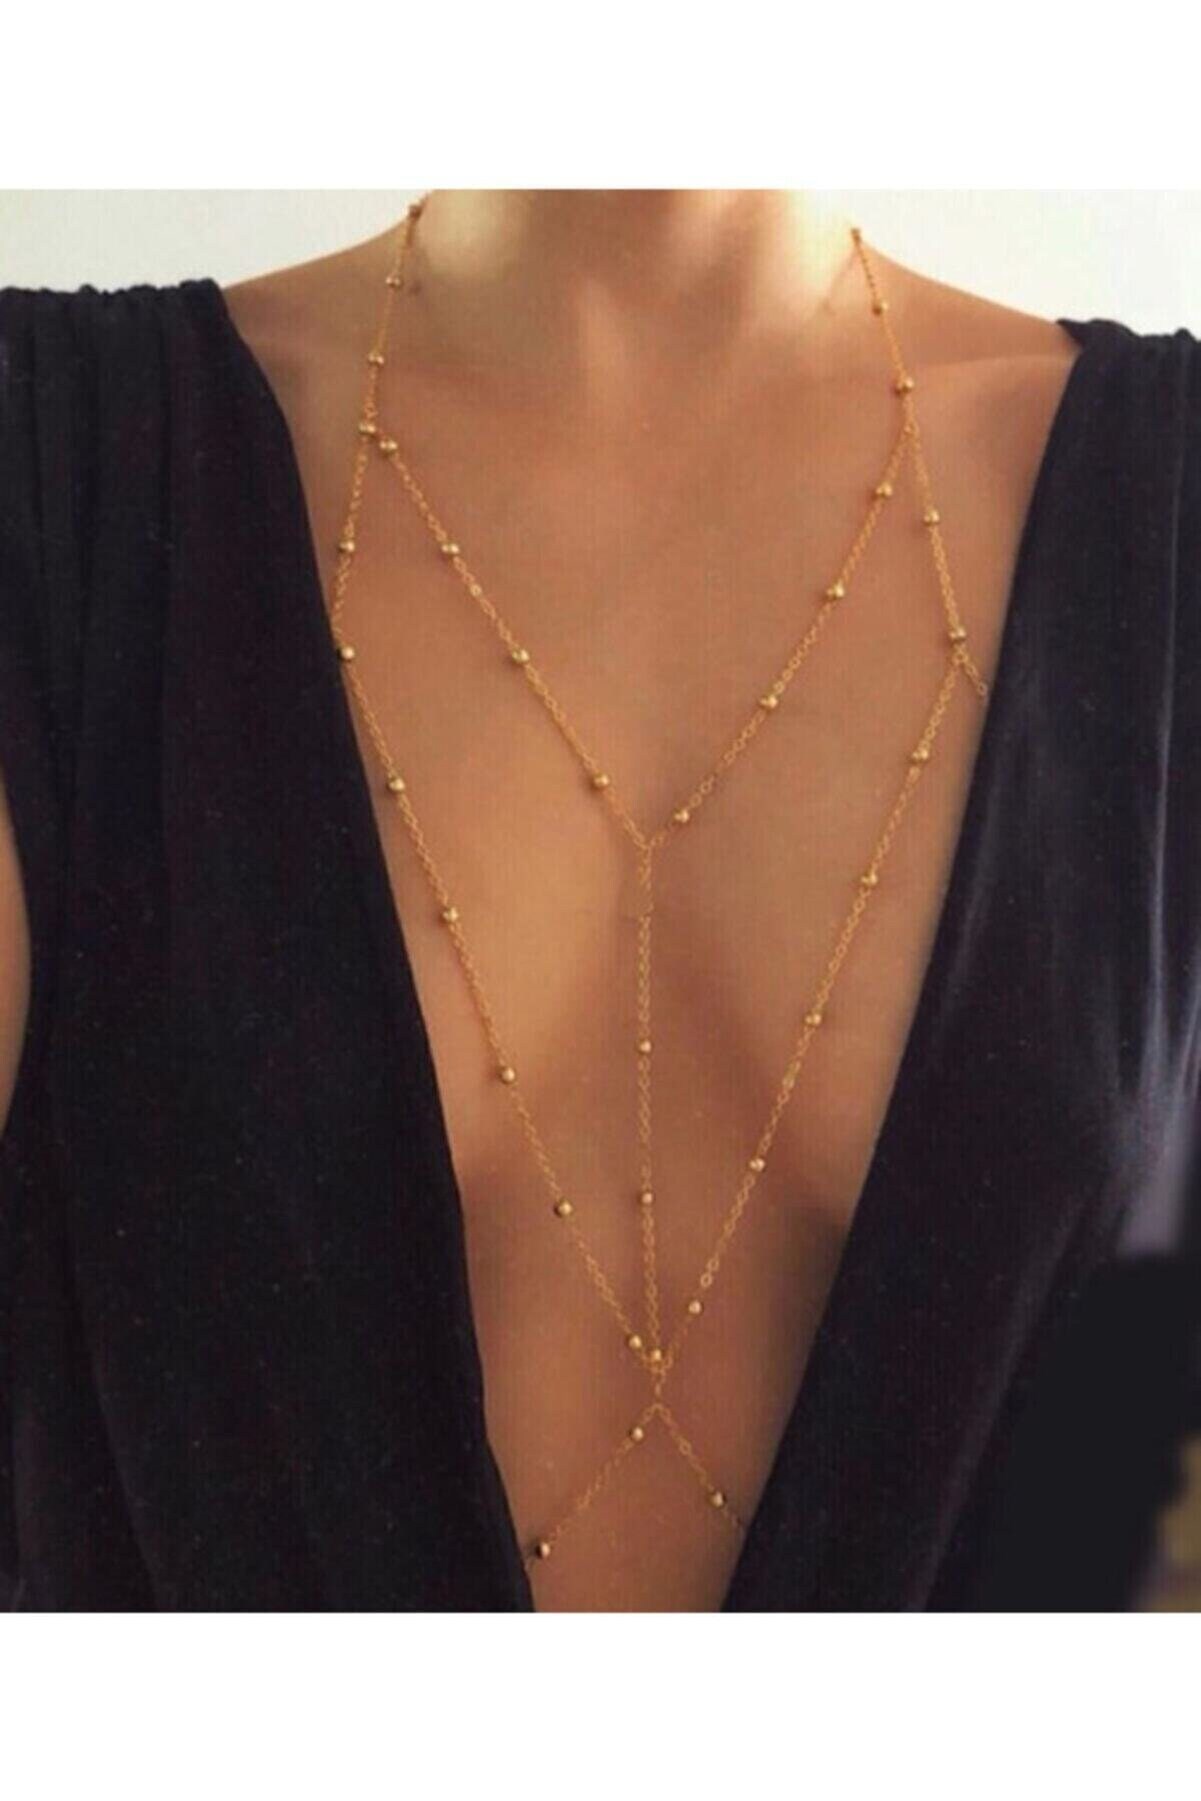 Body Jewelry, 14K Gold Plated Body Chain,Layered Body Chain Bralette,Bikini  Body Jewelry,Body Necklace,Gold Body Chain,Body Necklace